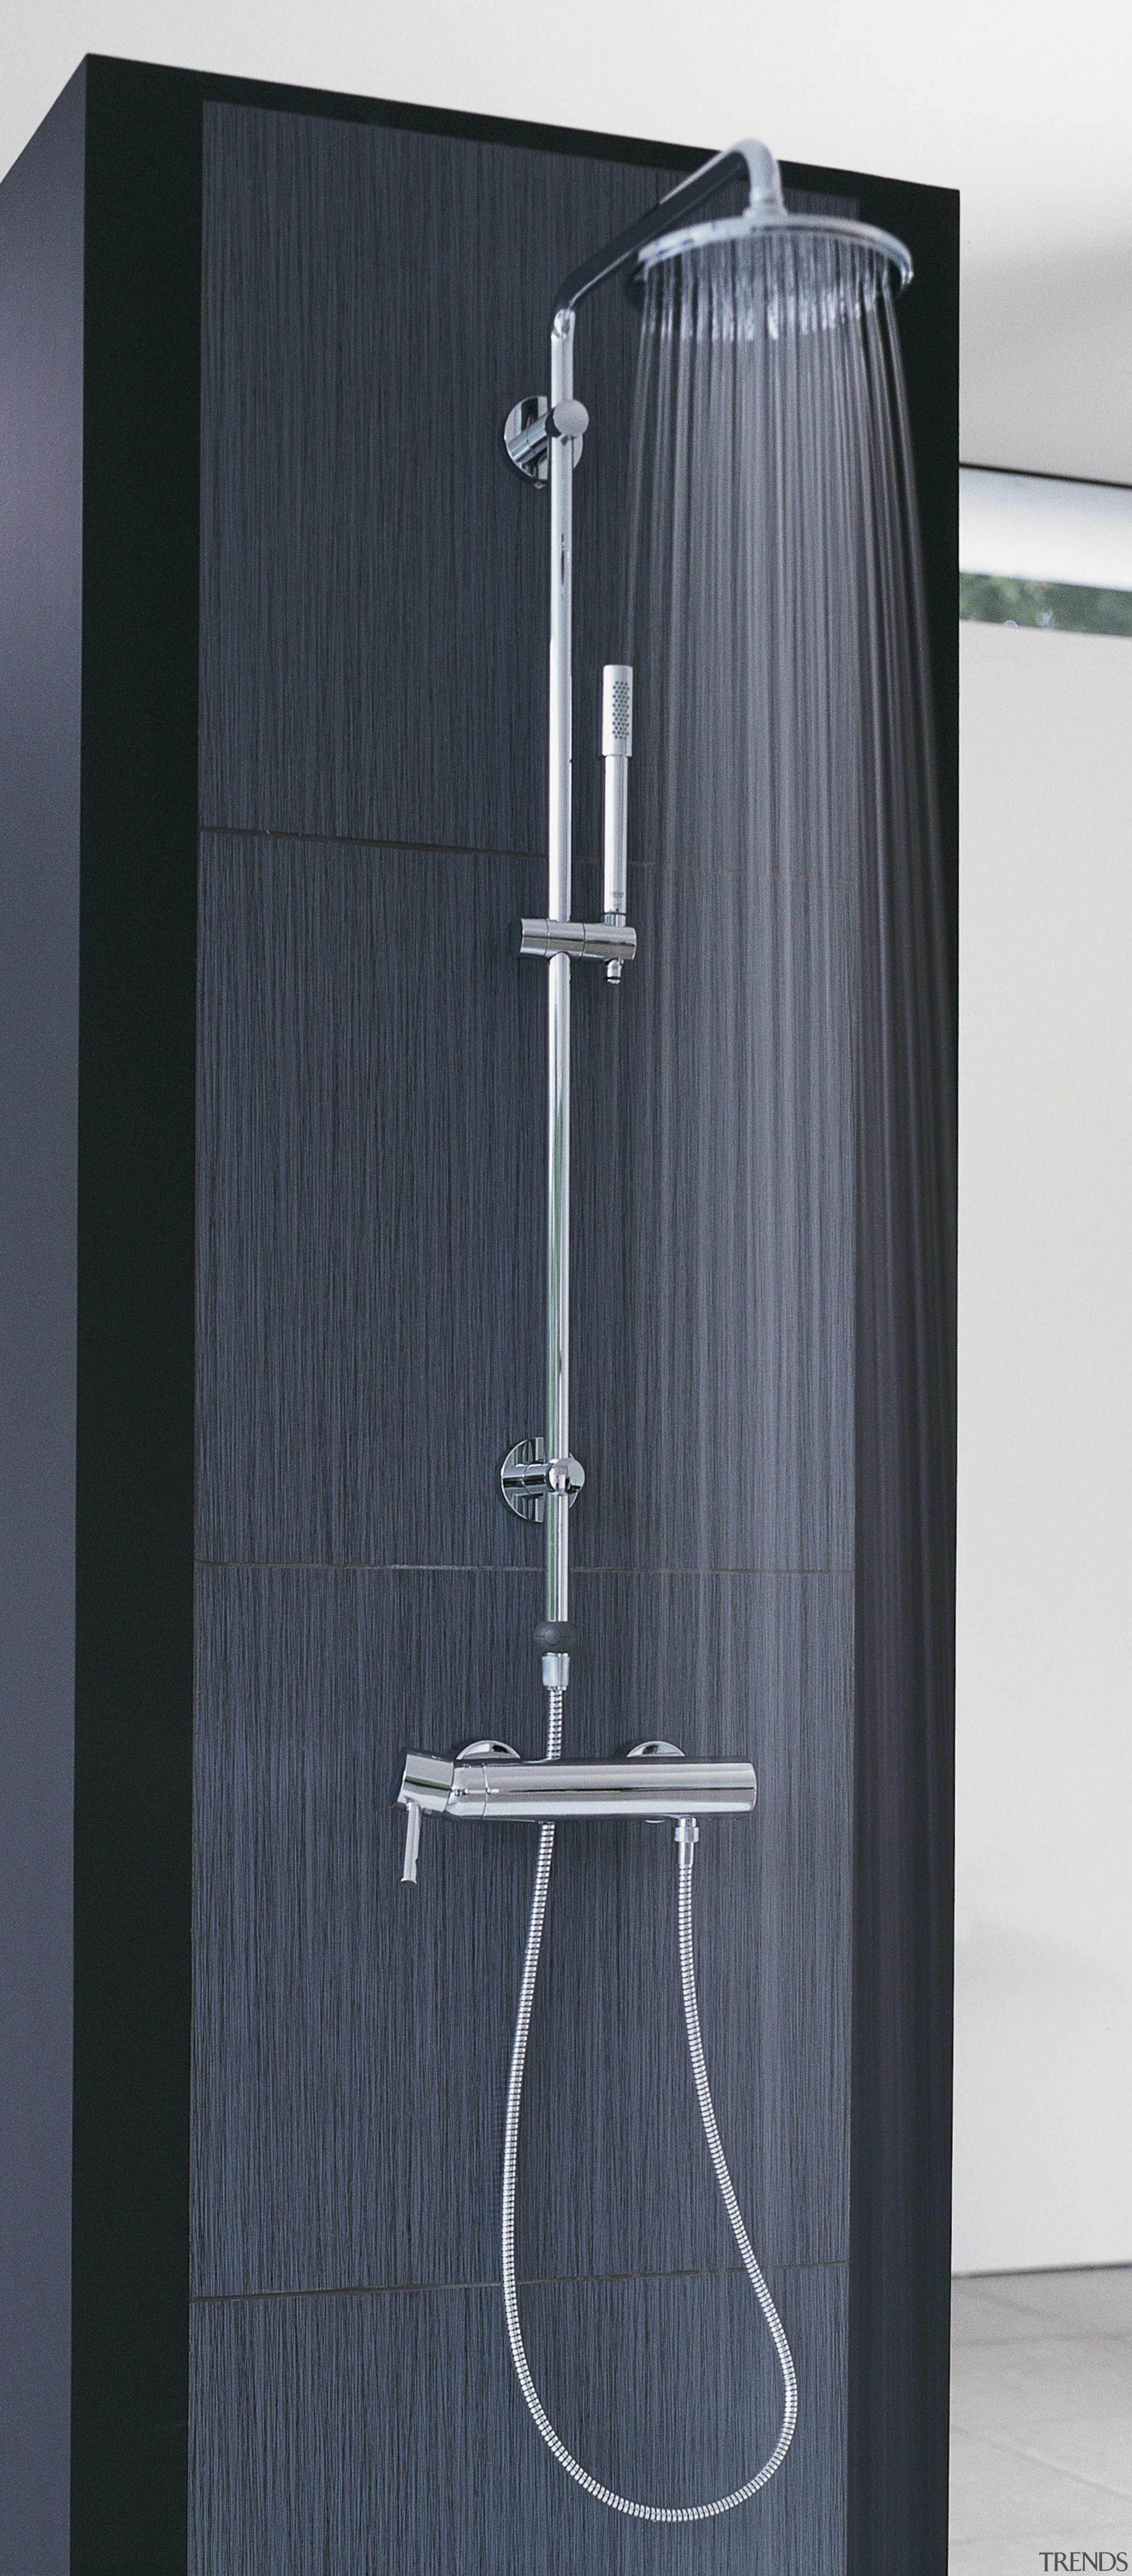 View of contemporary bathroom fixtures. - View of plumbing fixture, product design, shower, tap, black, gray